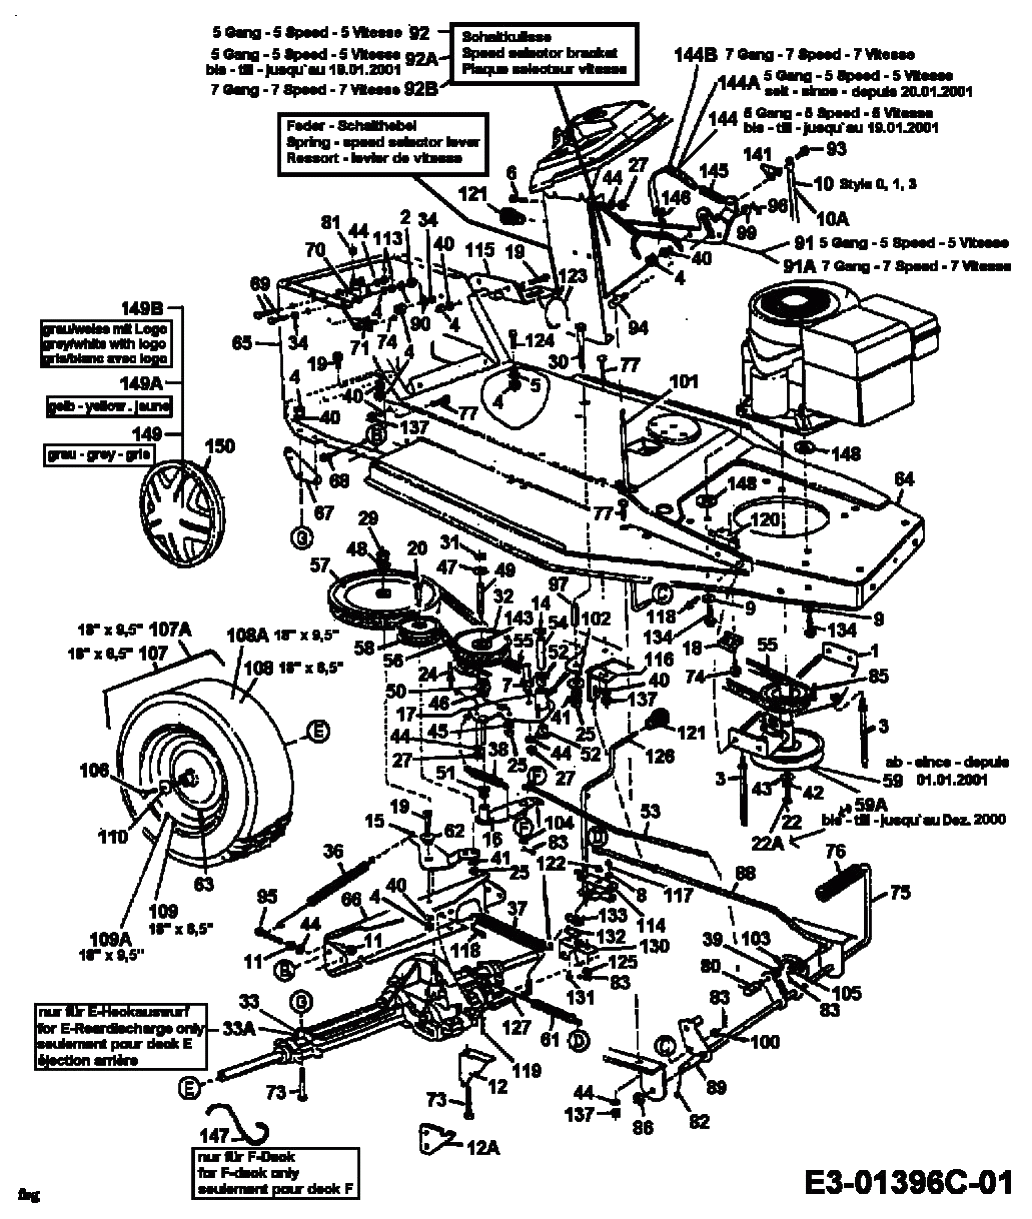 MTD Артикул 13A1450C600 (год выпуска 2001). Система привода, шкив двигателя, педали, задние колеса